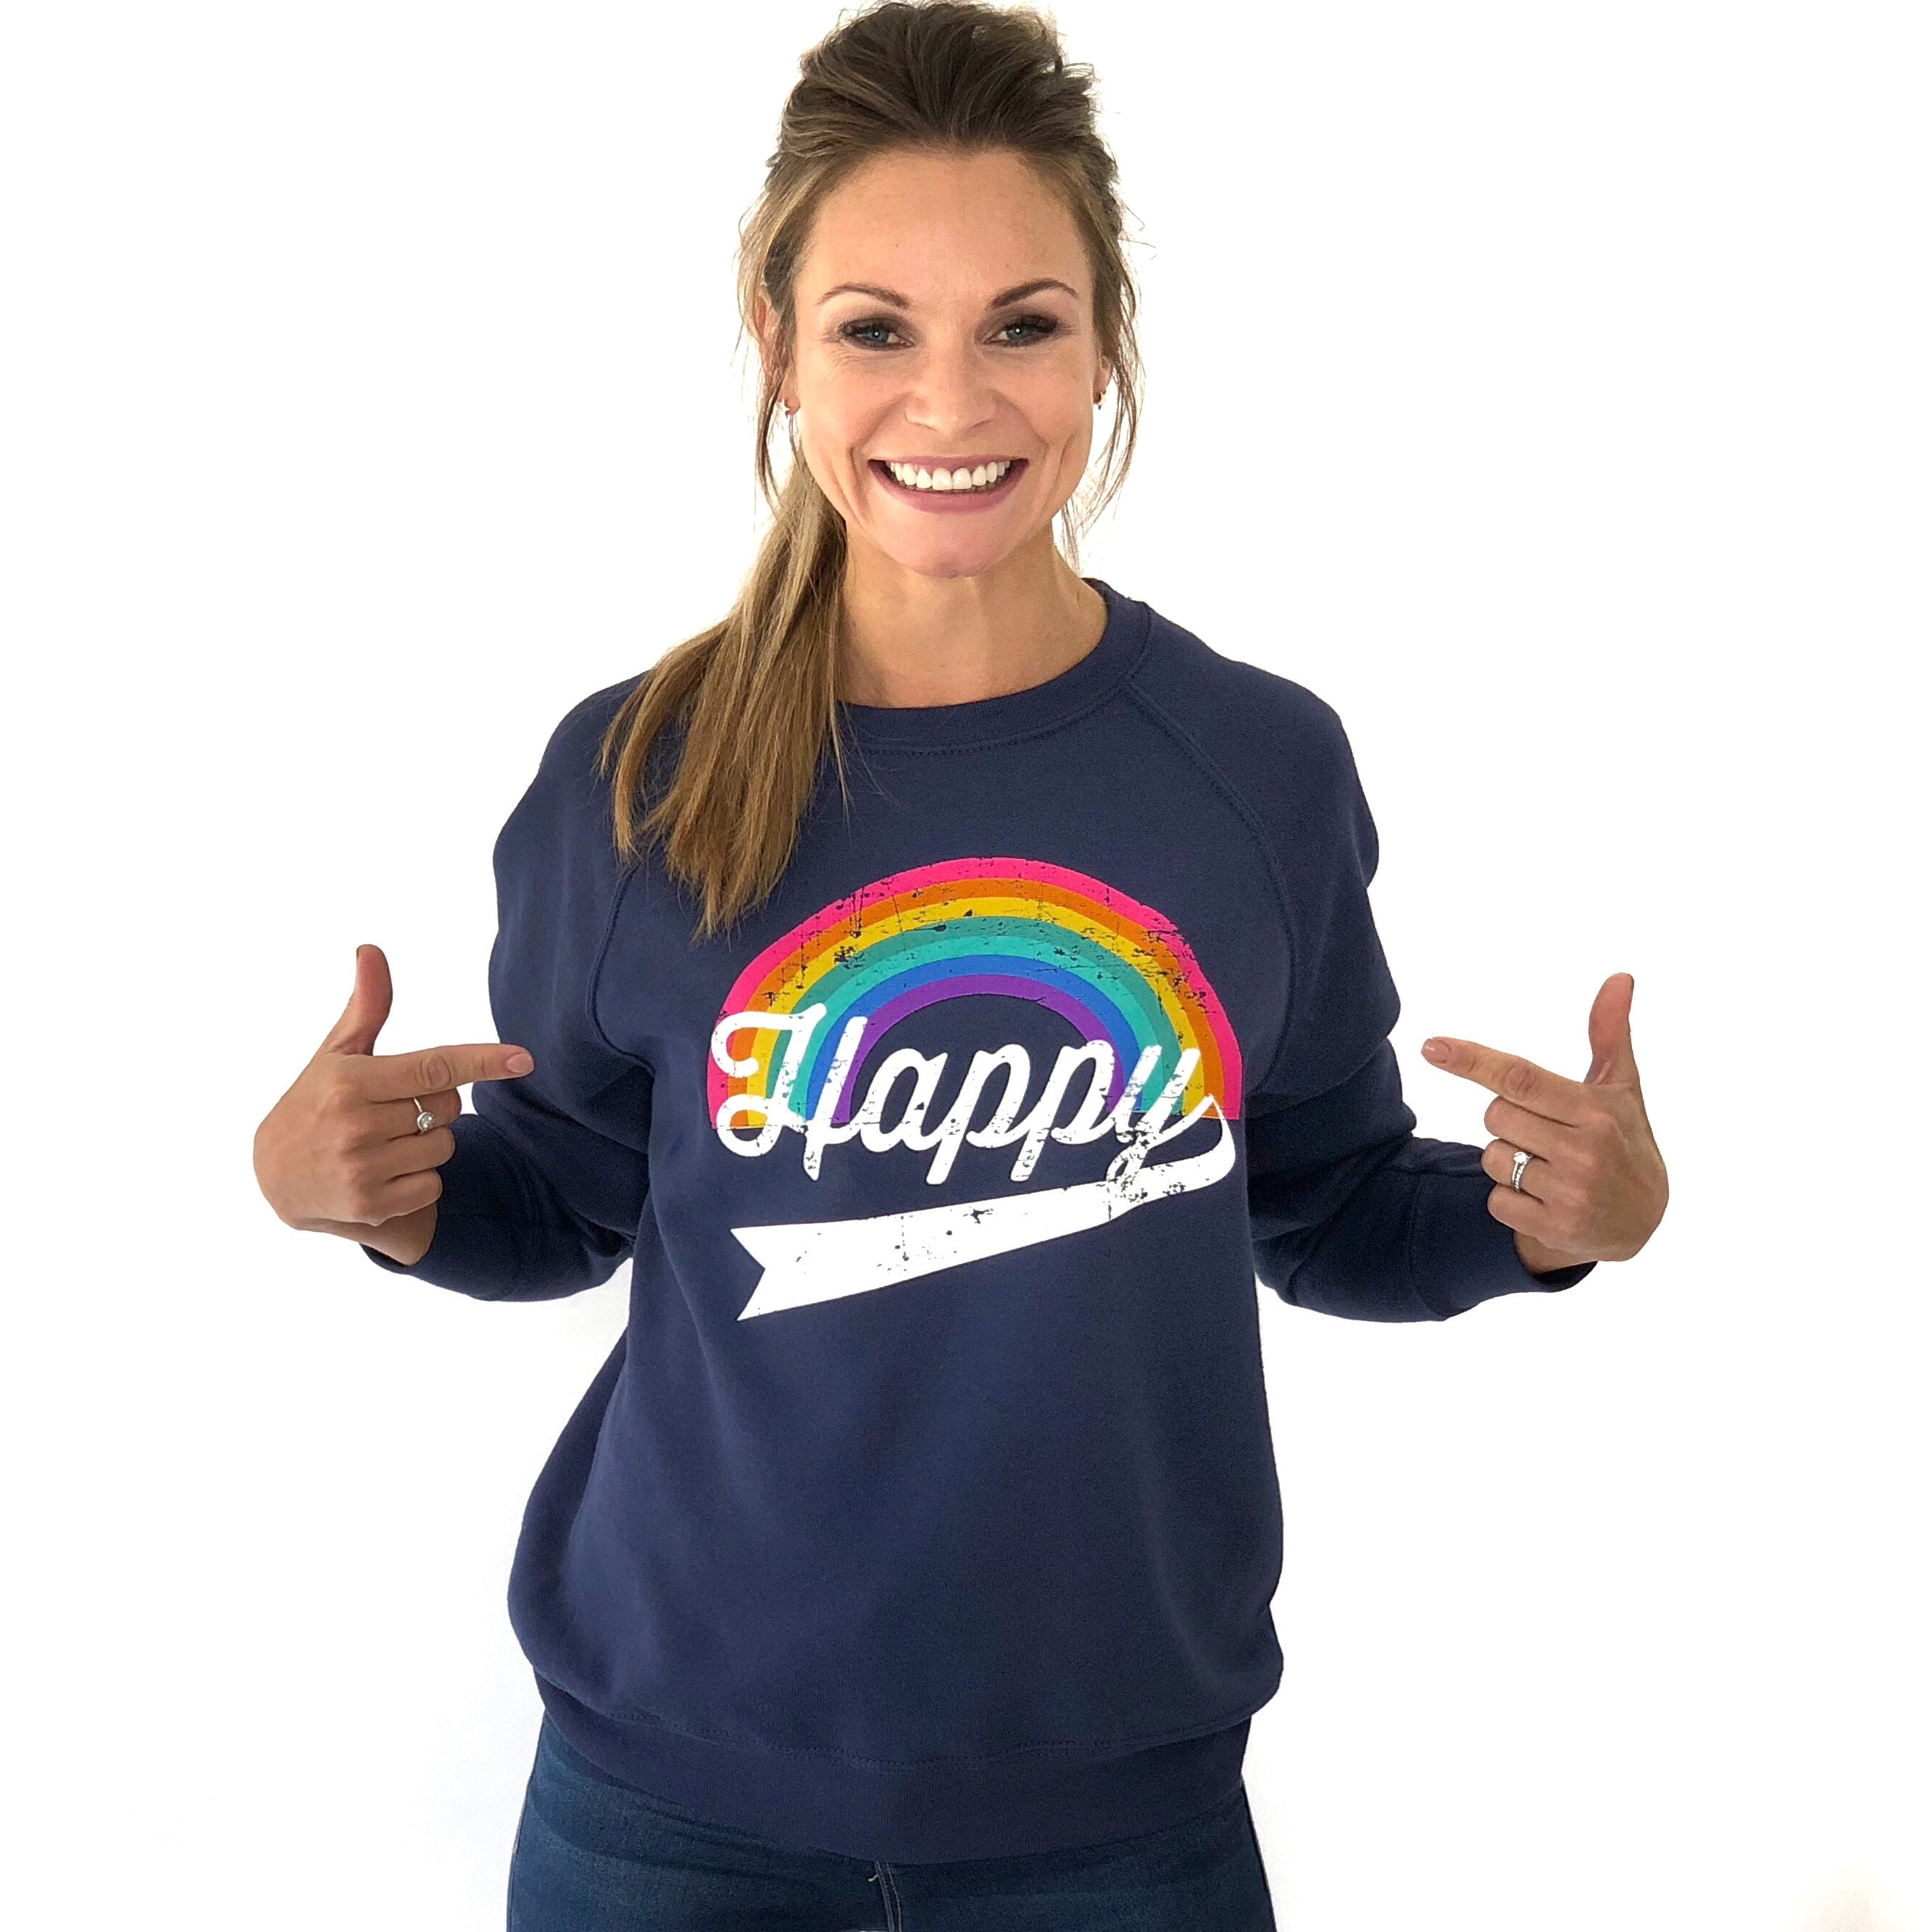 happy slogan jumper